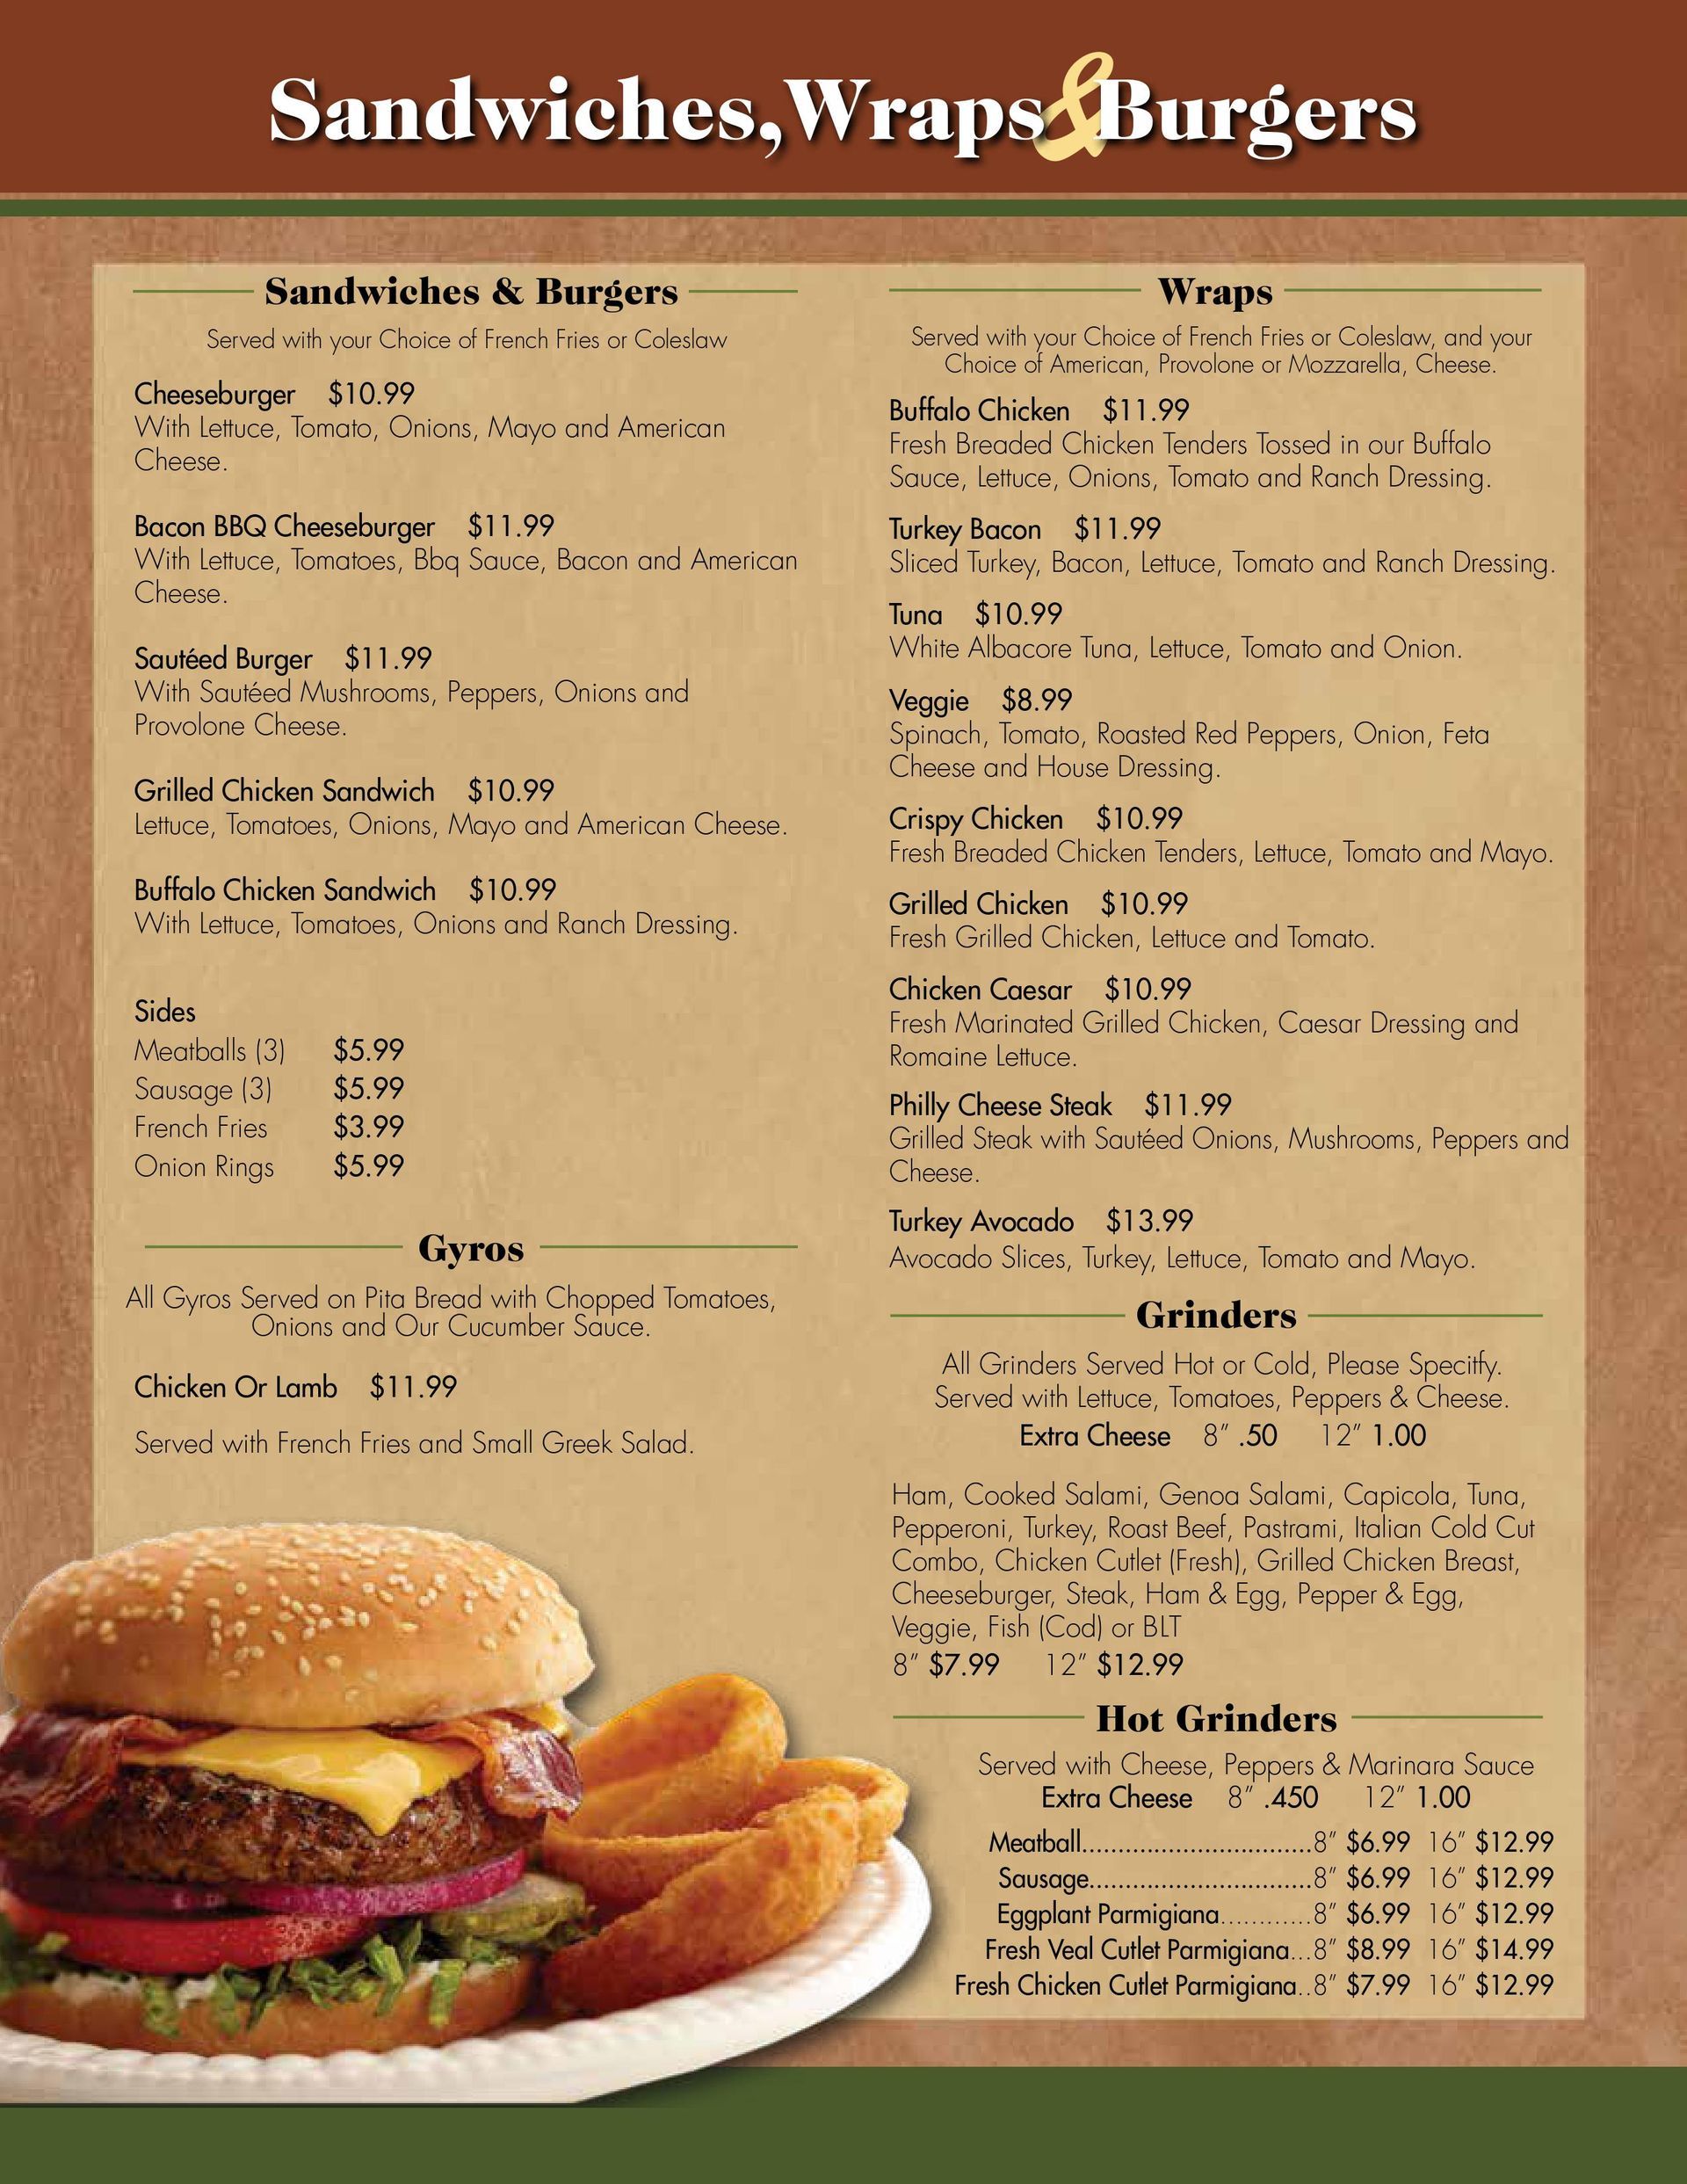 Sandwich wraps and burgers menu